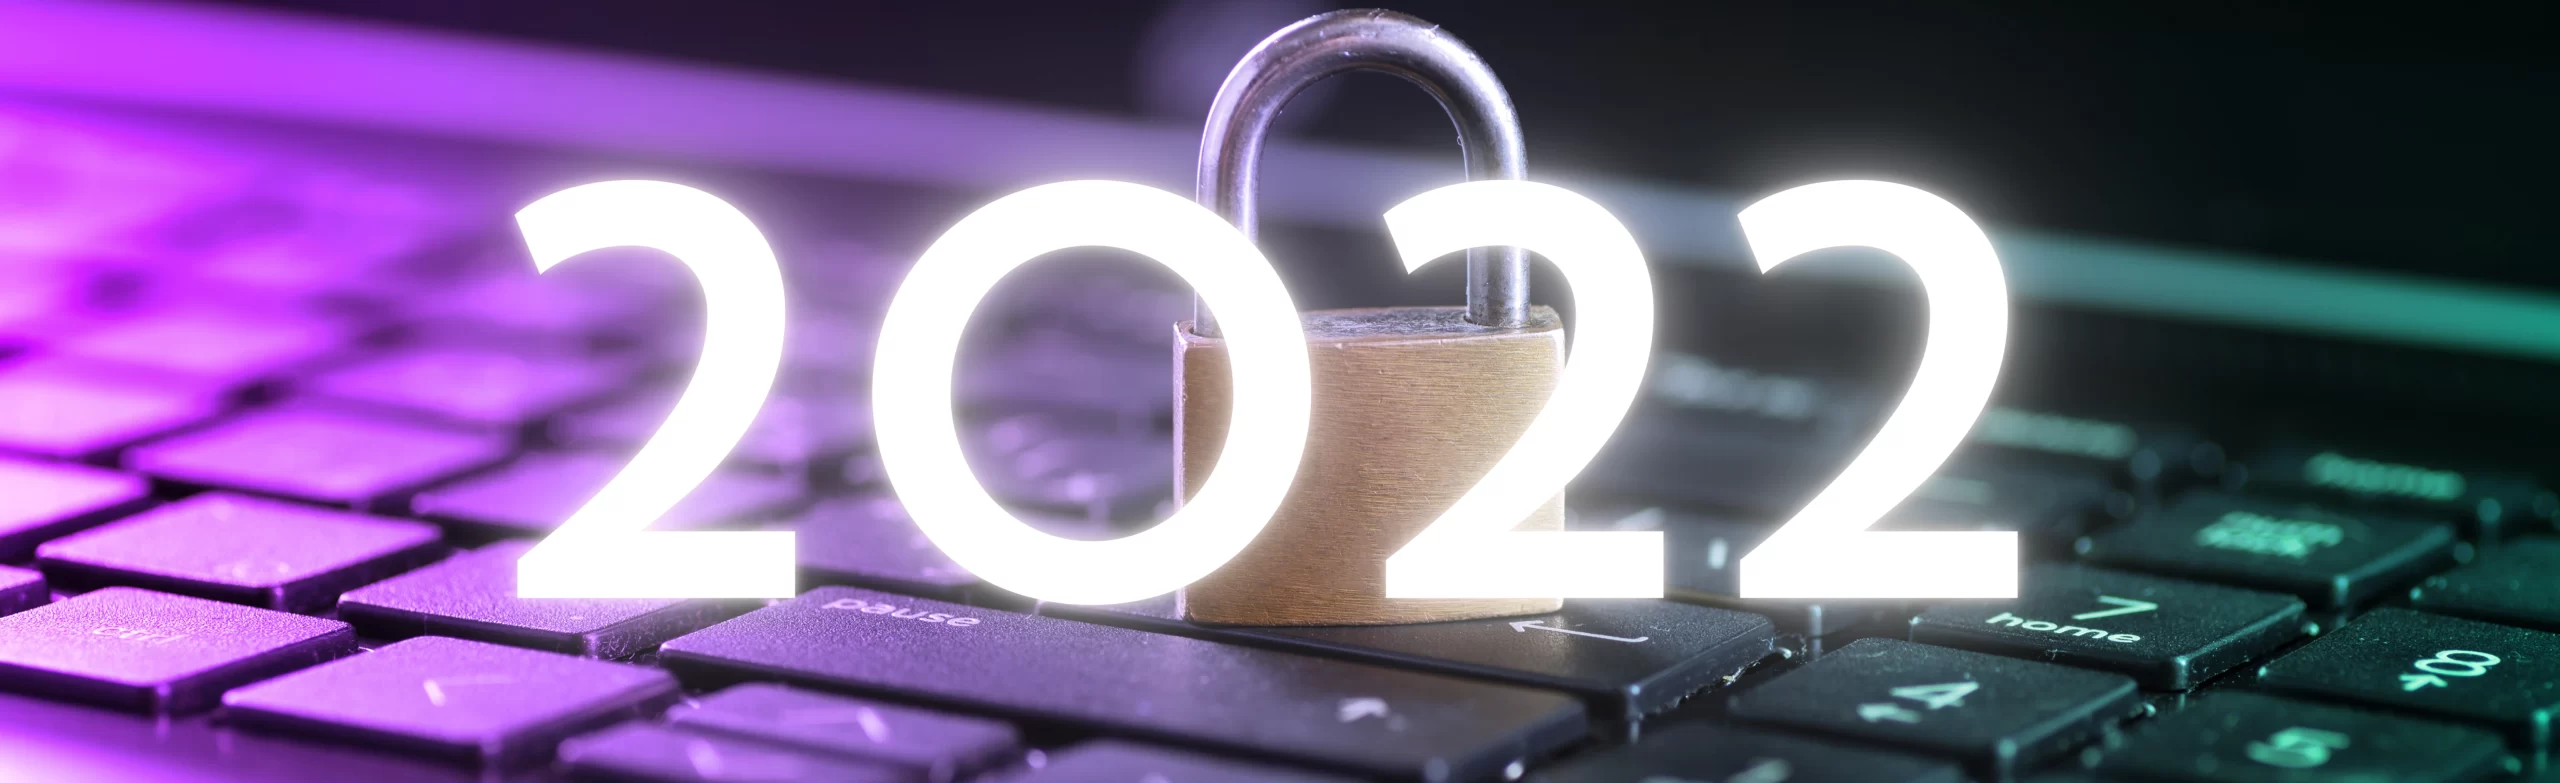 Spotlight on “Cyber Good Guys” Entering New Year 2022 Thumbnail